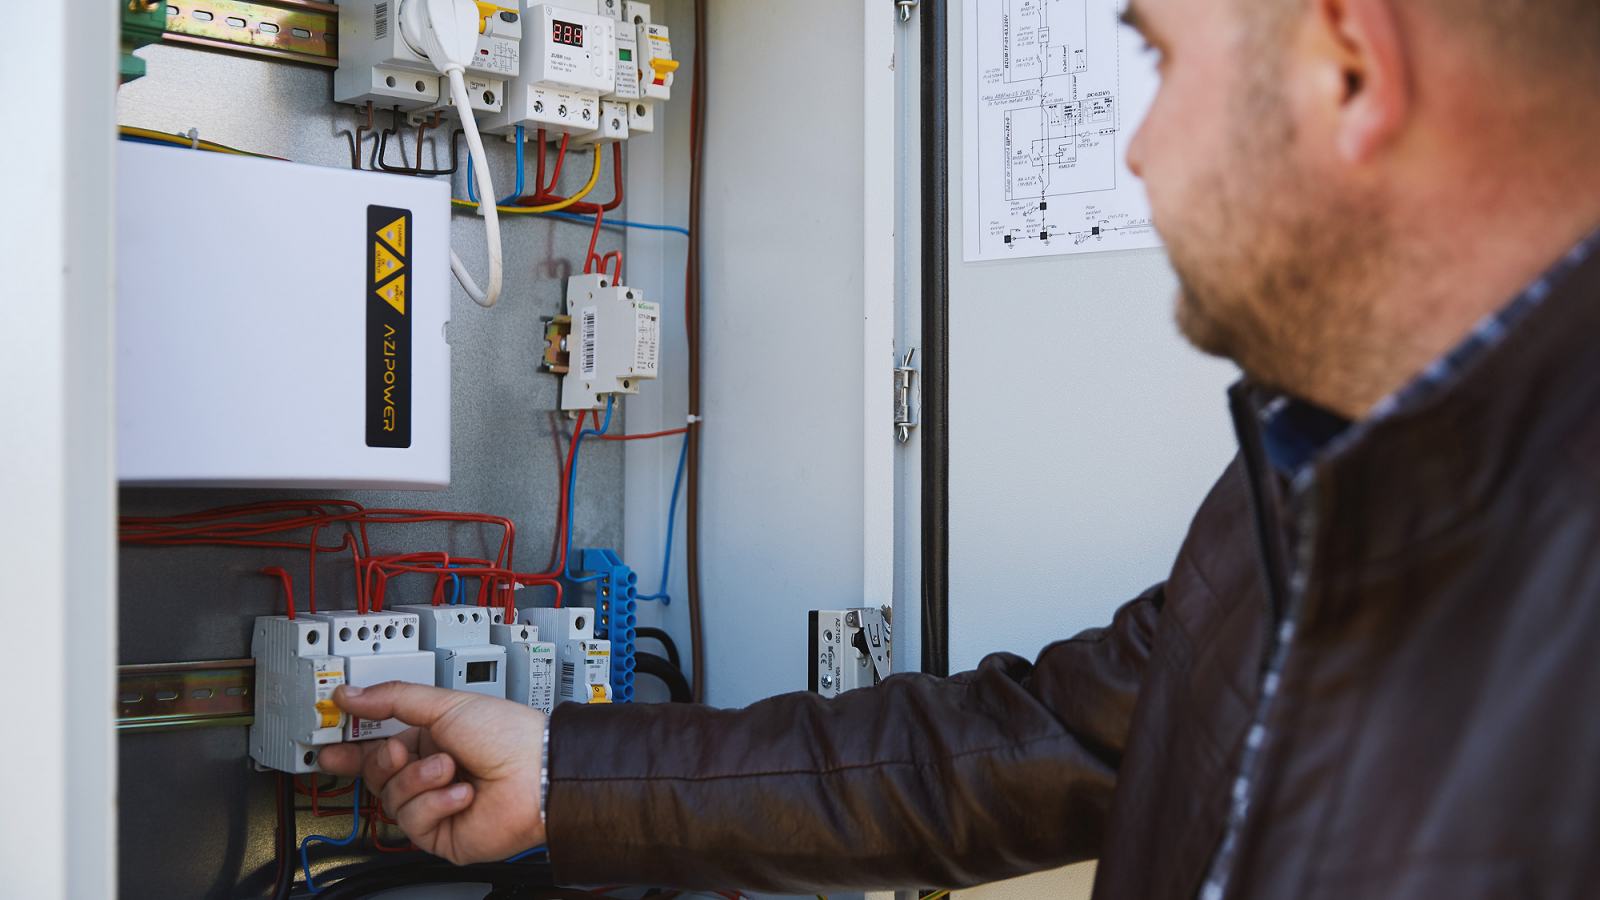 Ukraine: New system for monitoring energy consumption in public buildings in Ukrainka 